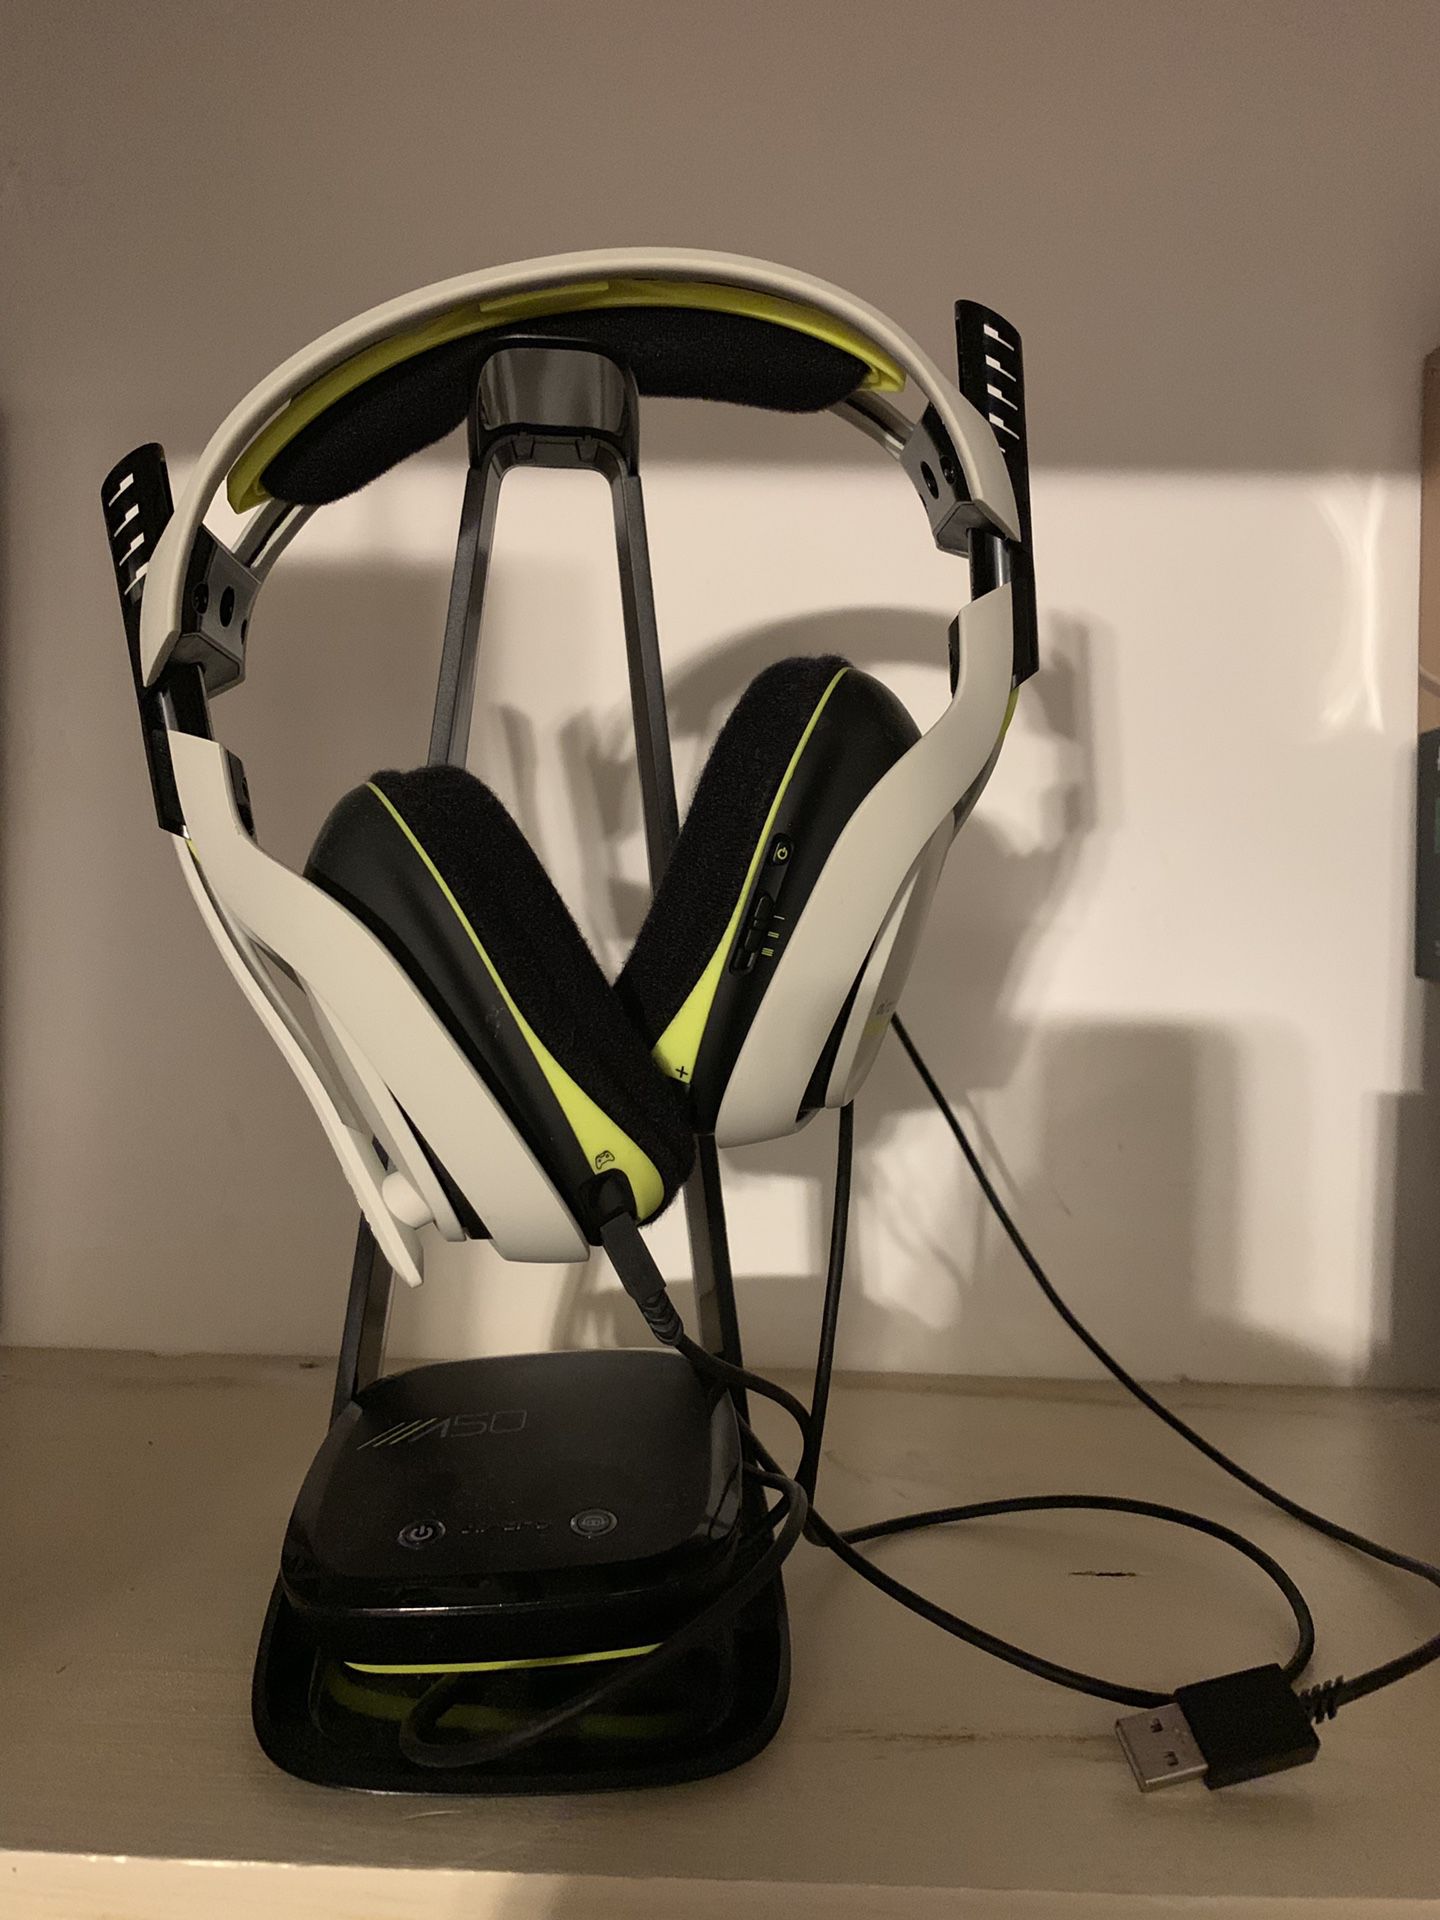 Astro A50 wireless gaming headphones